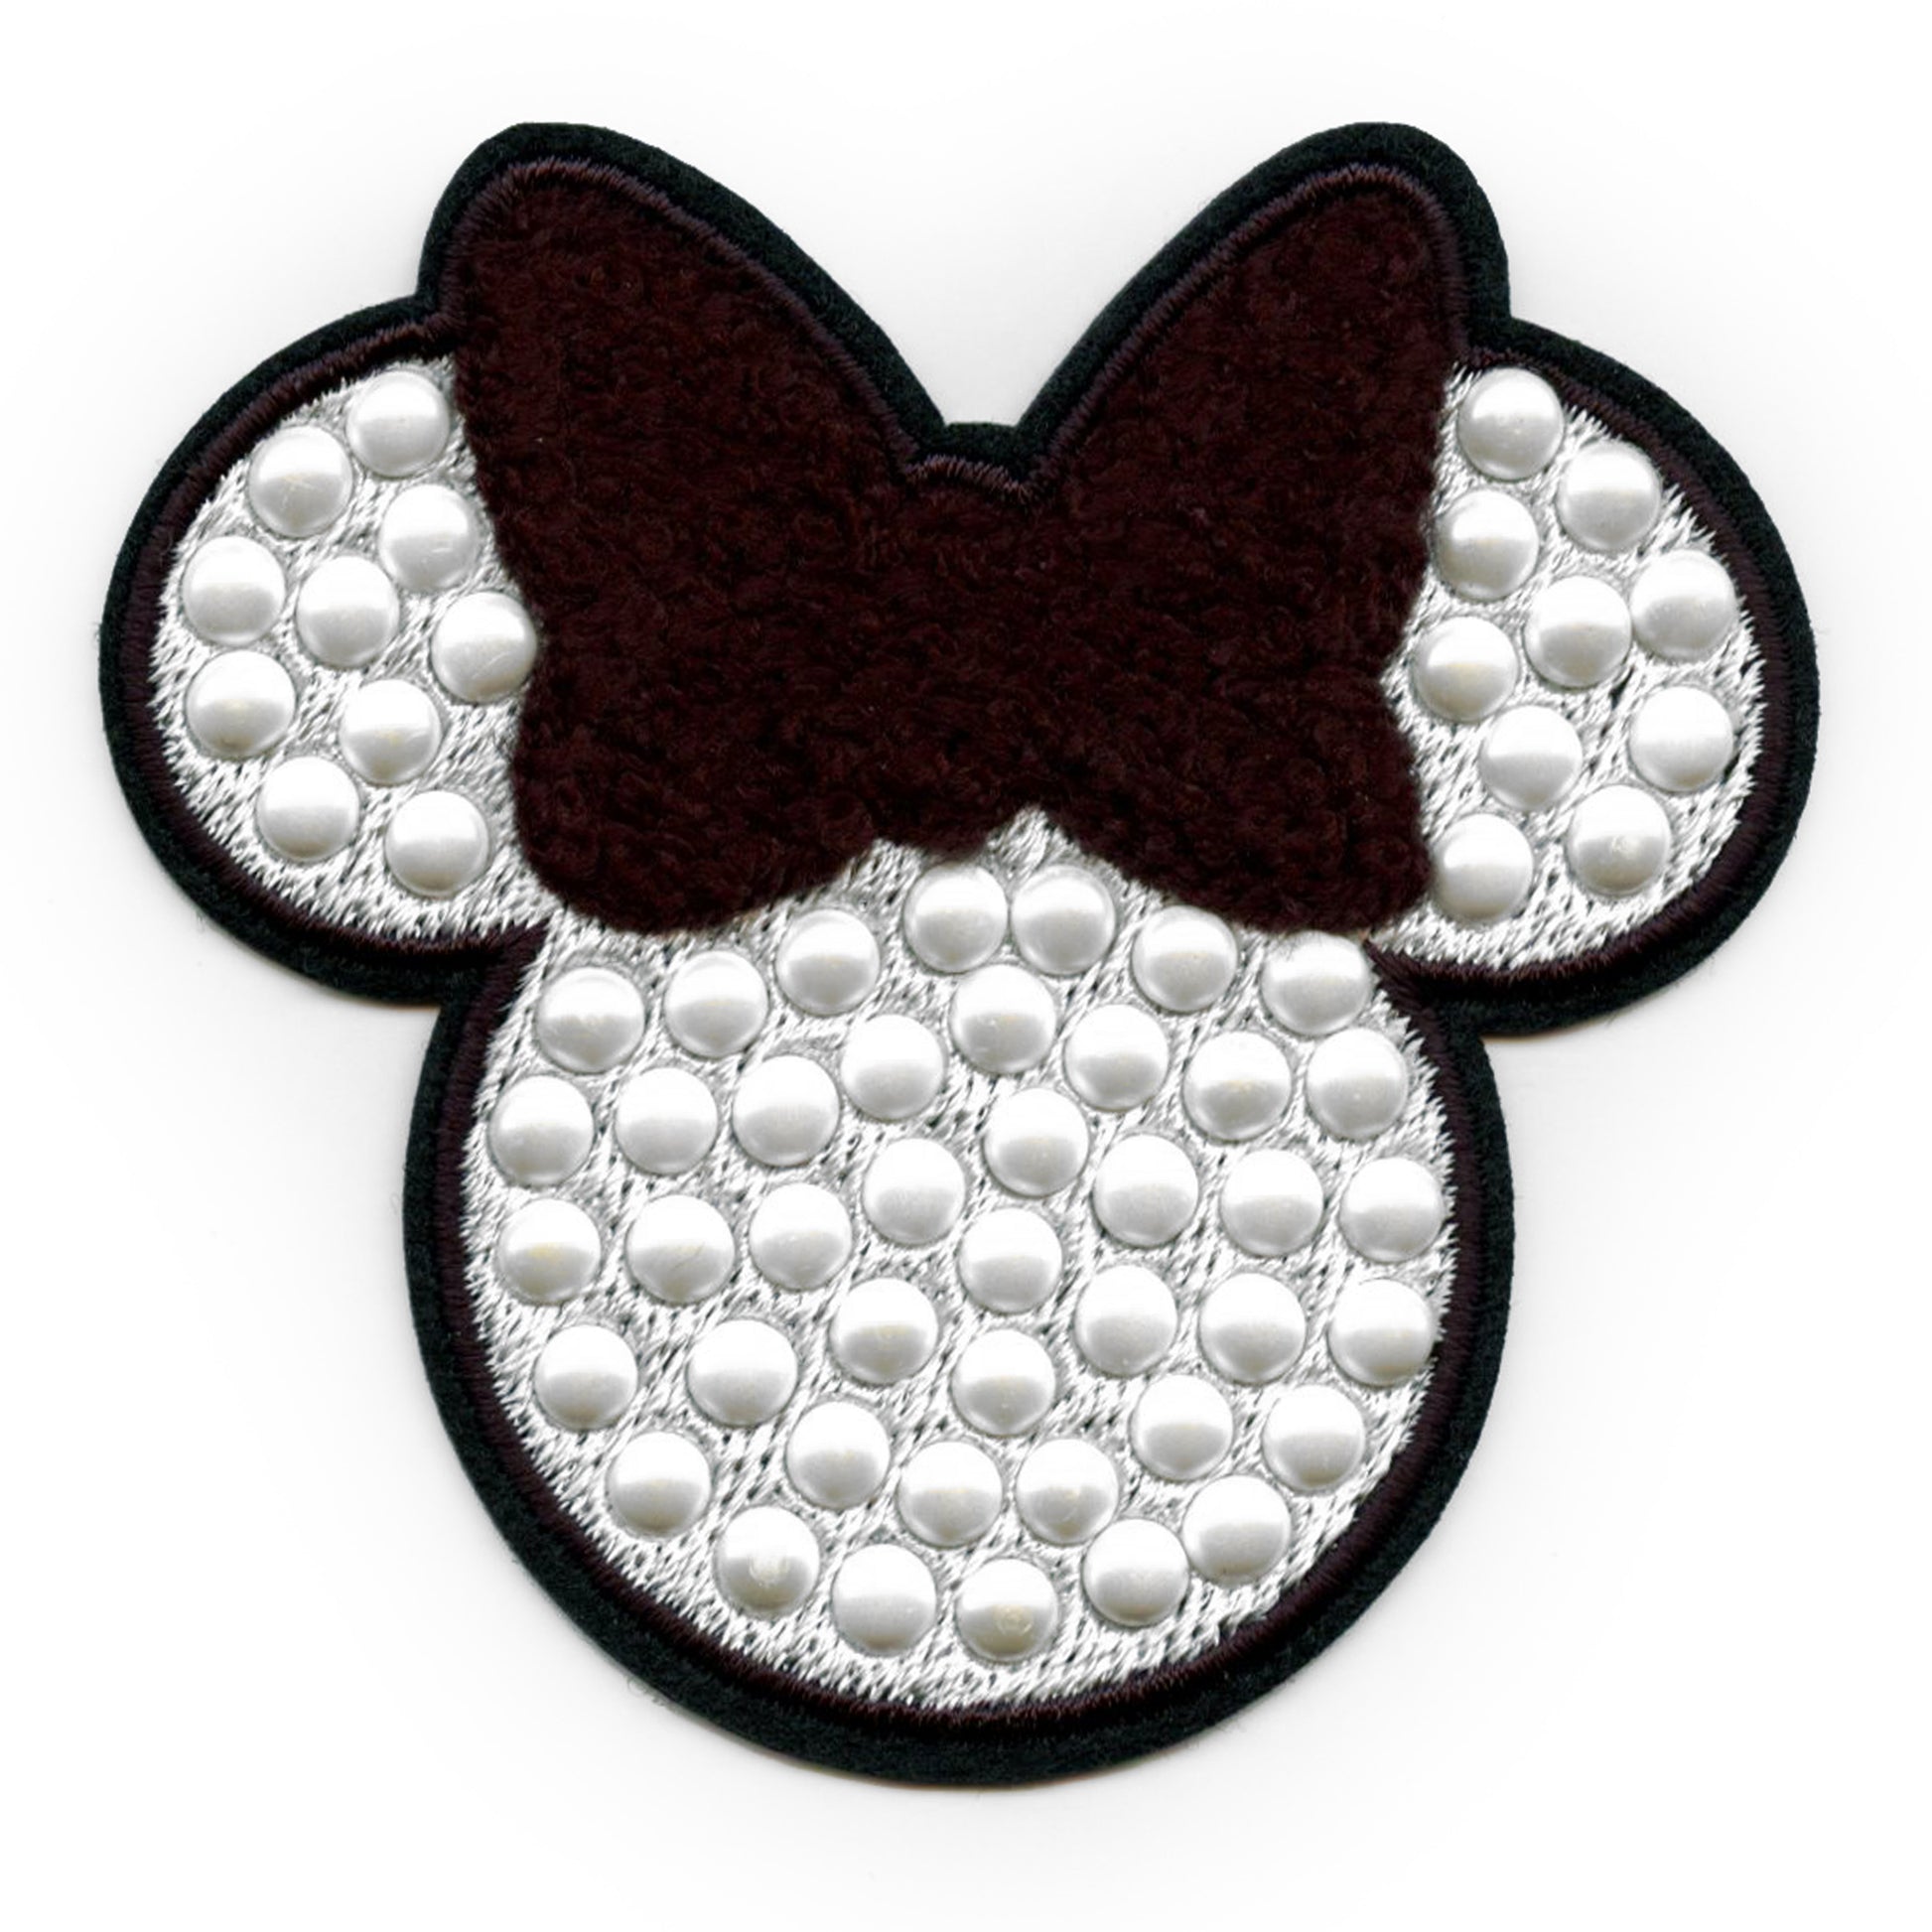 Disney Lilo & Stitch Sequin Iron-On Patch